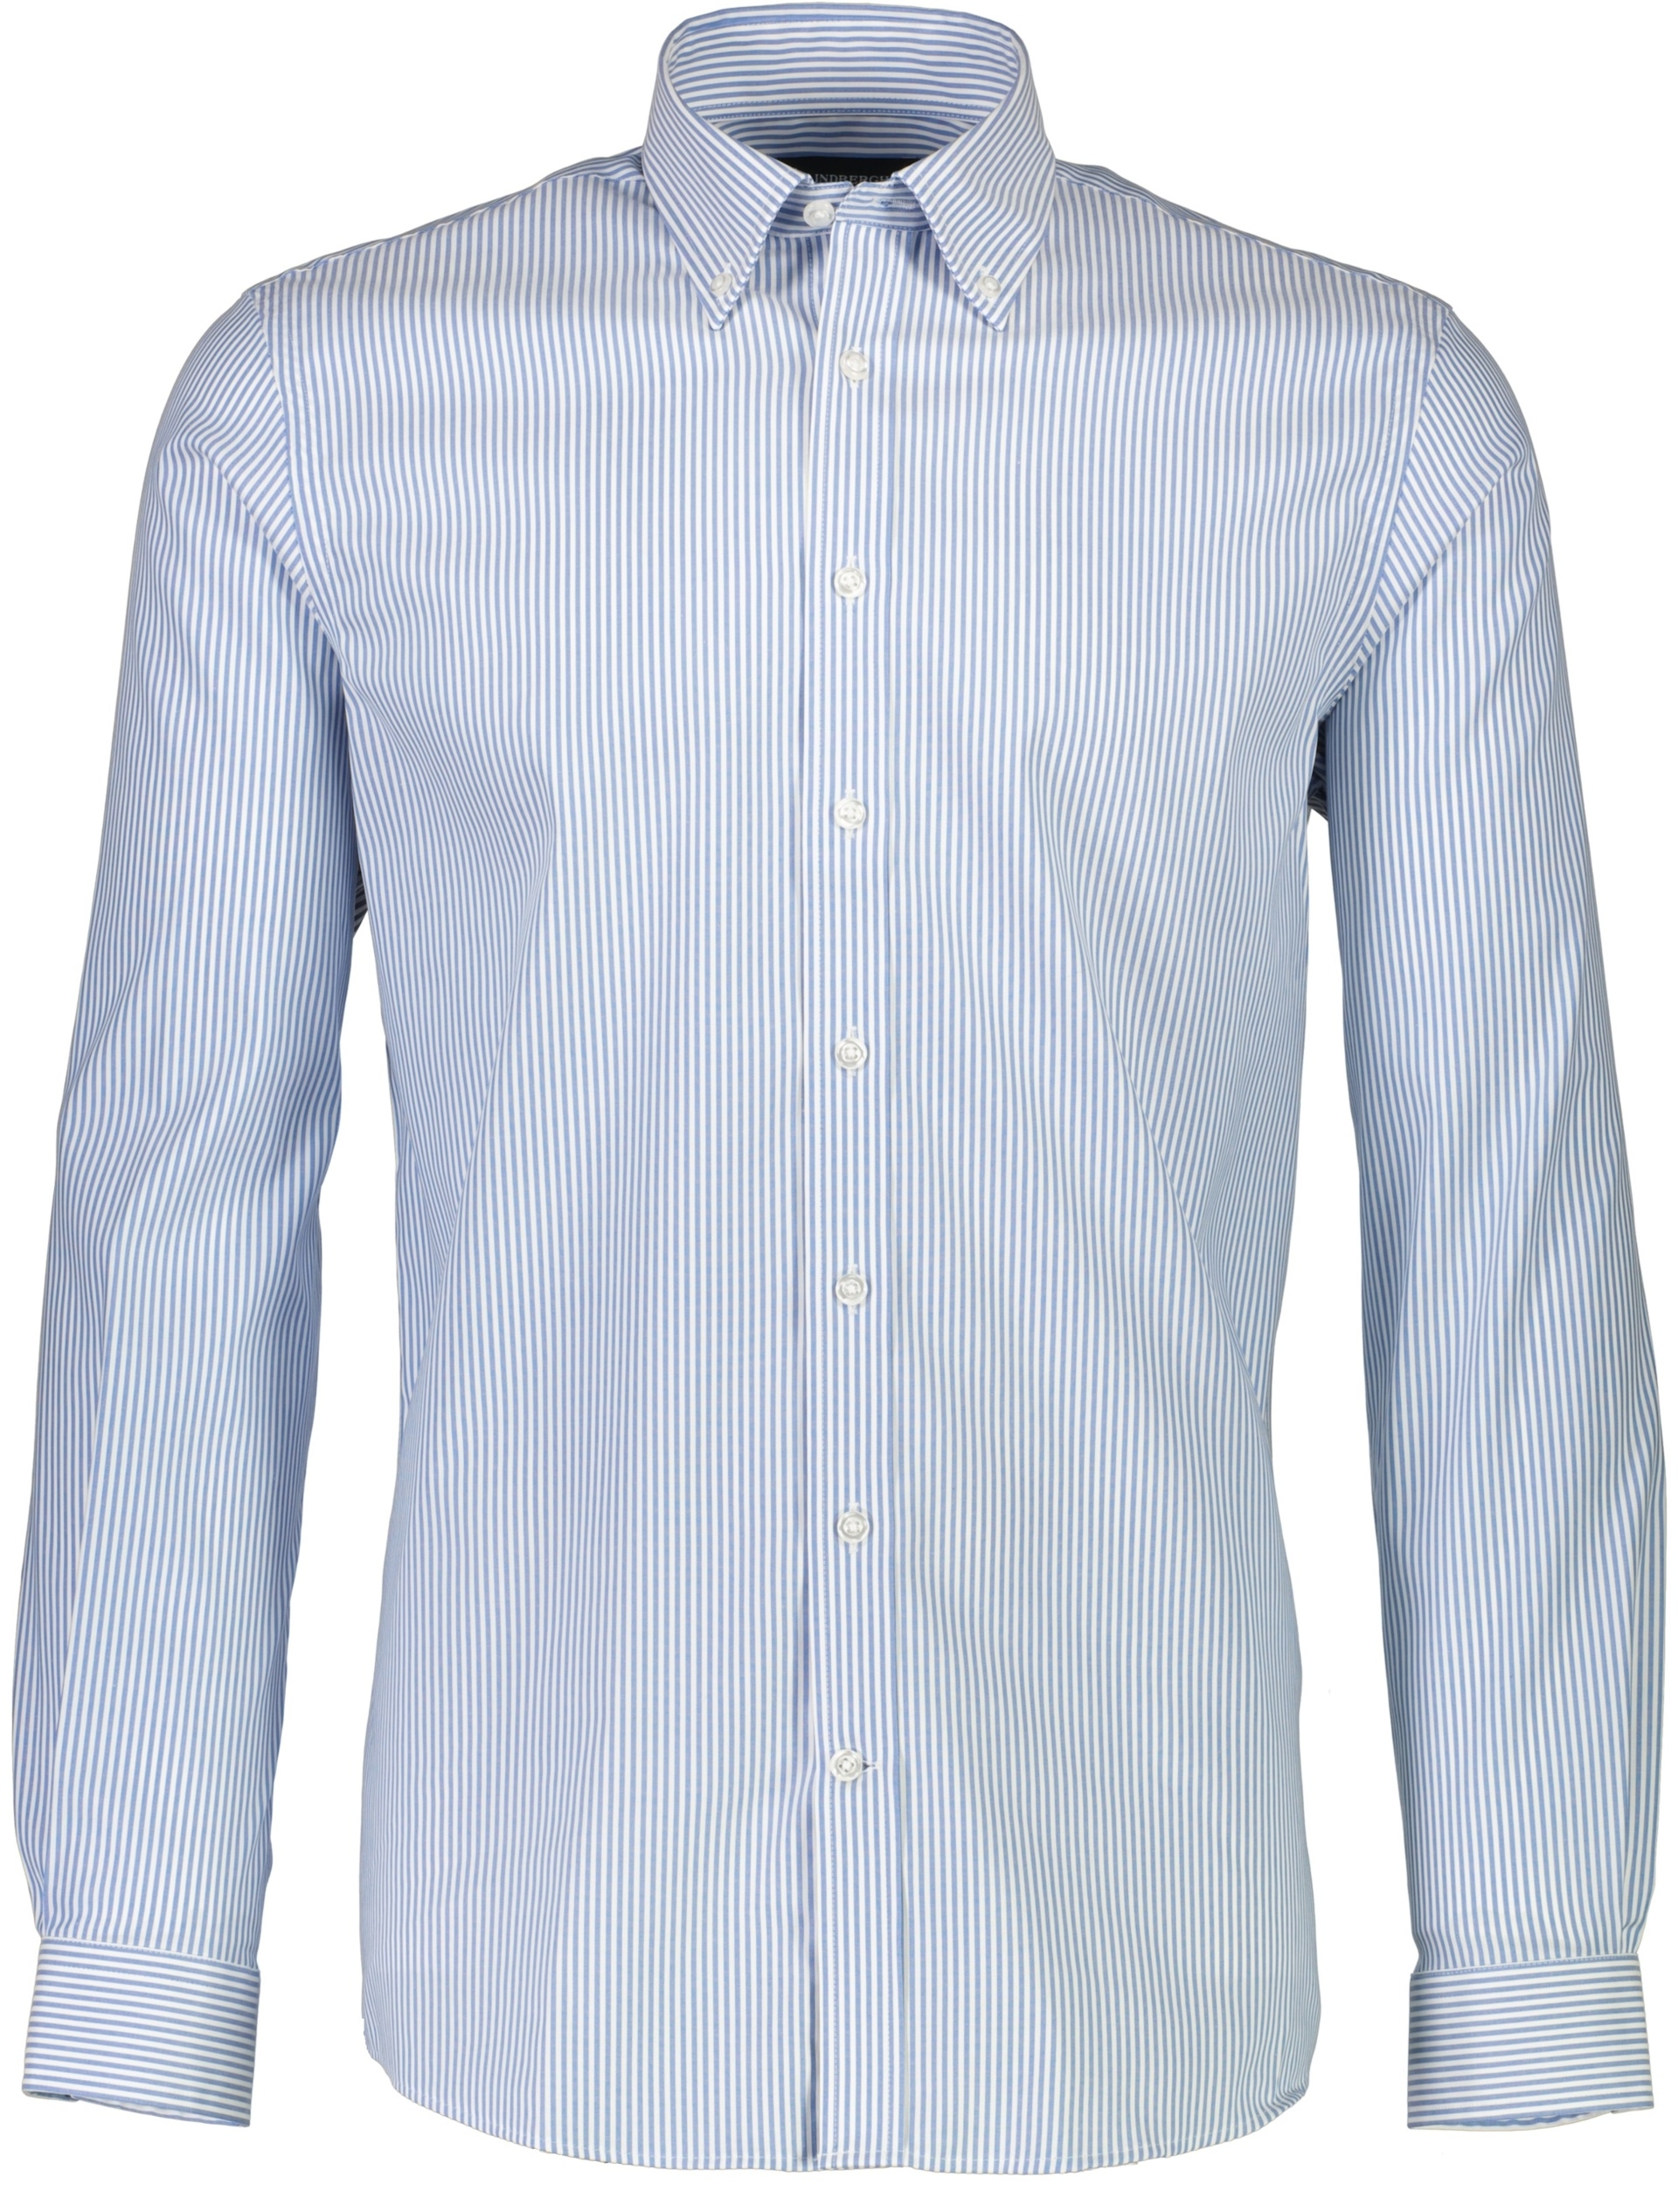 Lindbergh Business casual shirt blue / light blue stripe